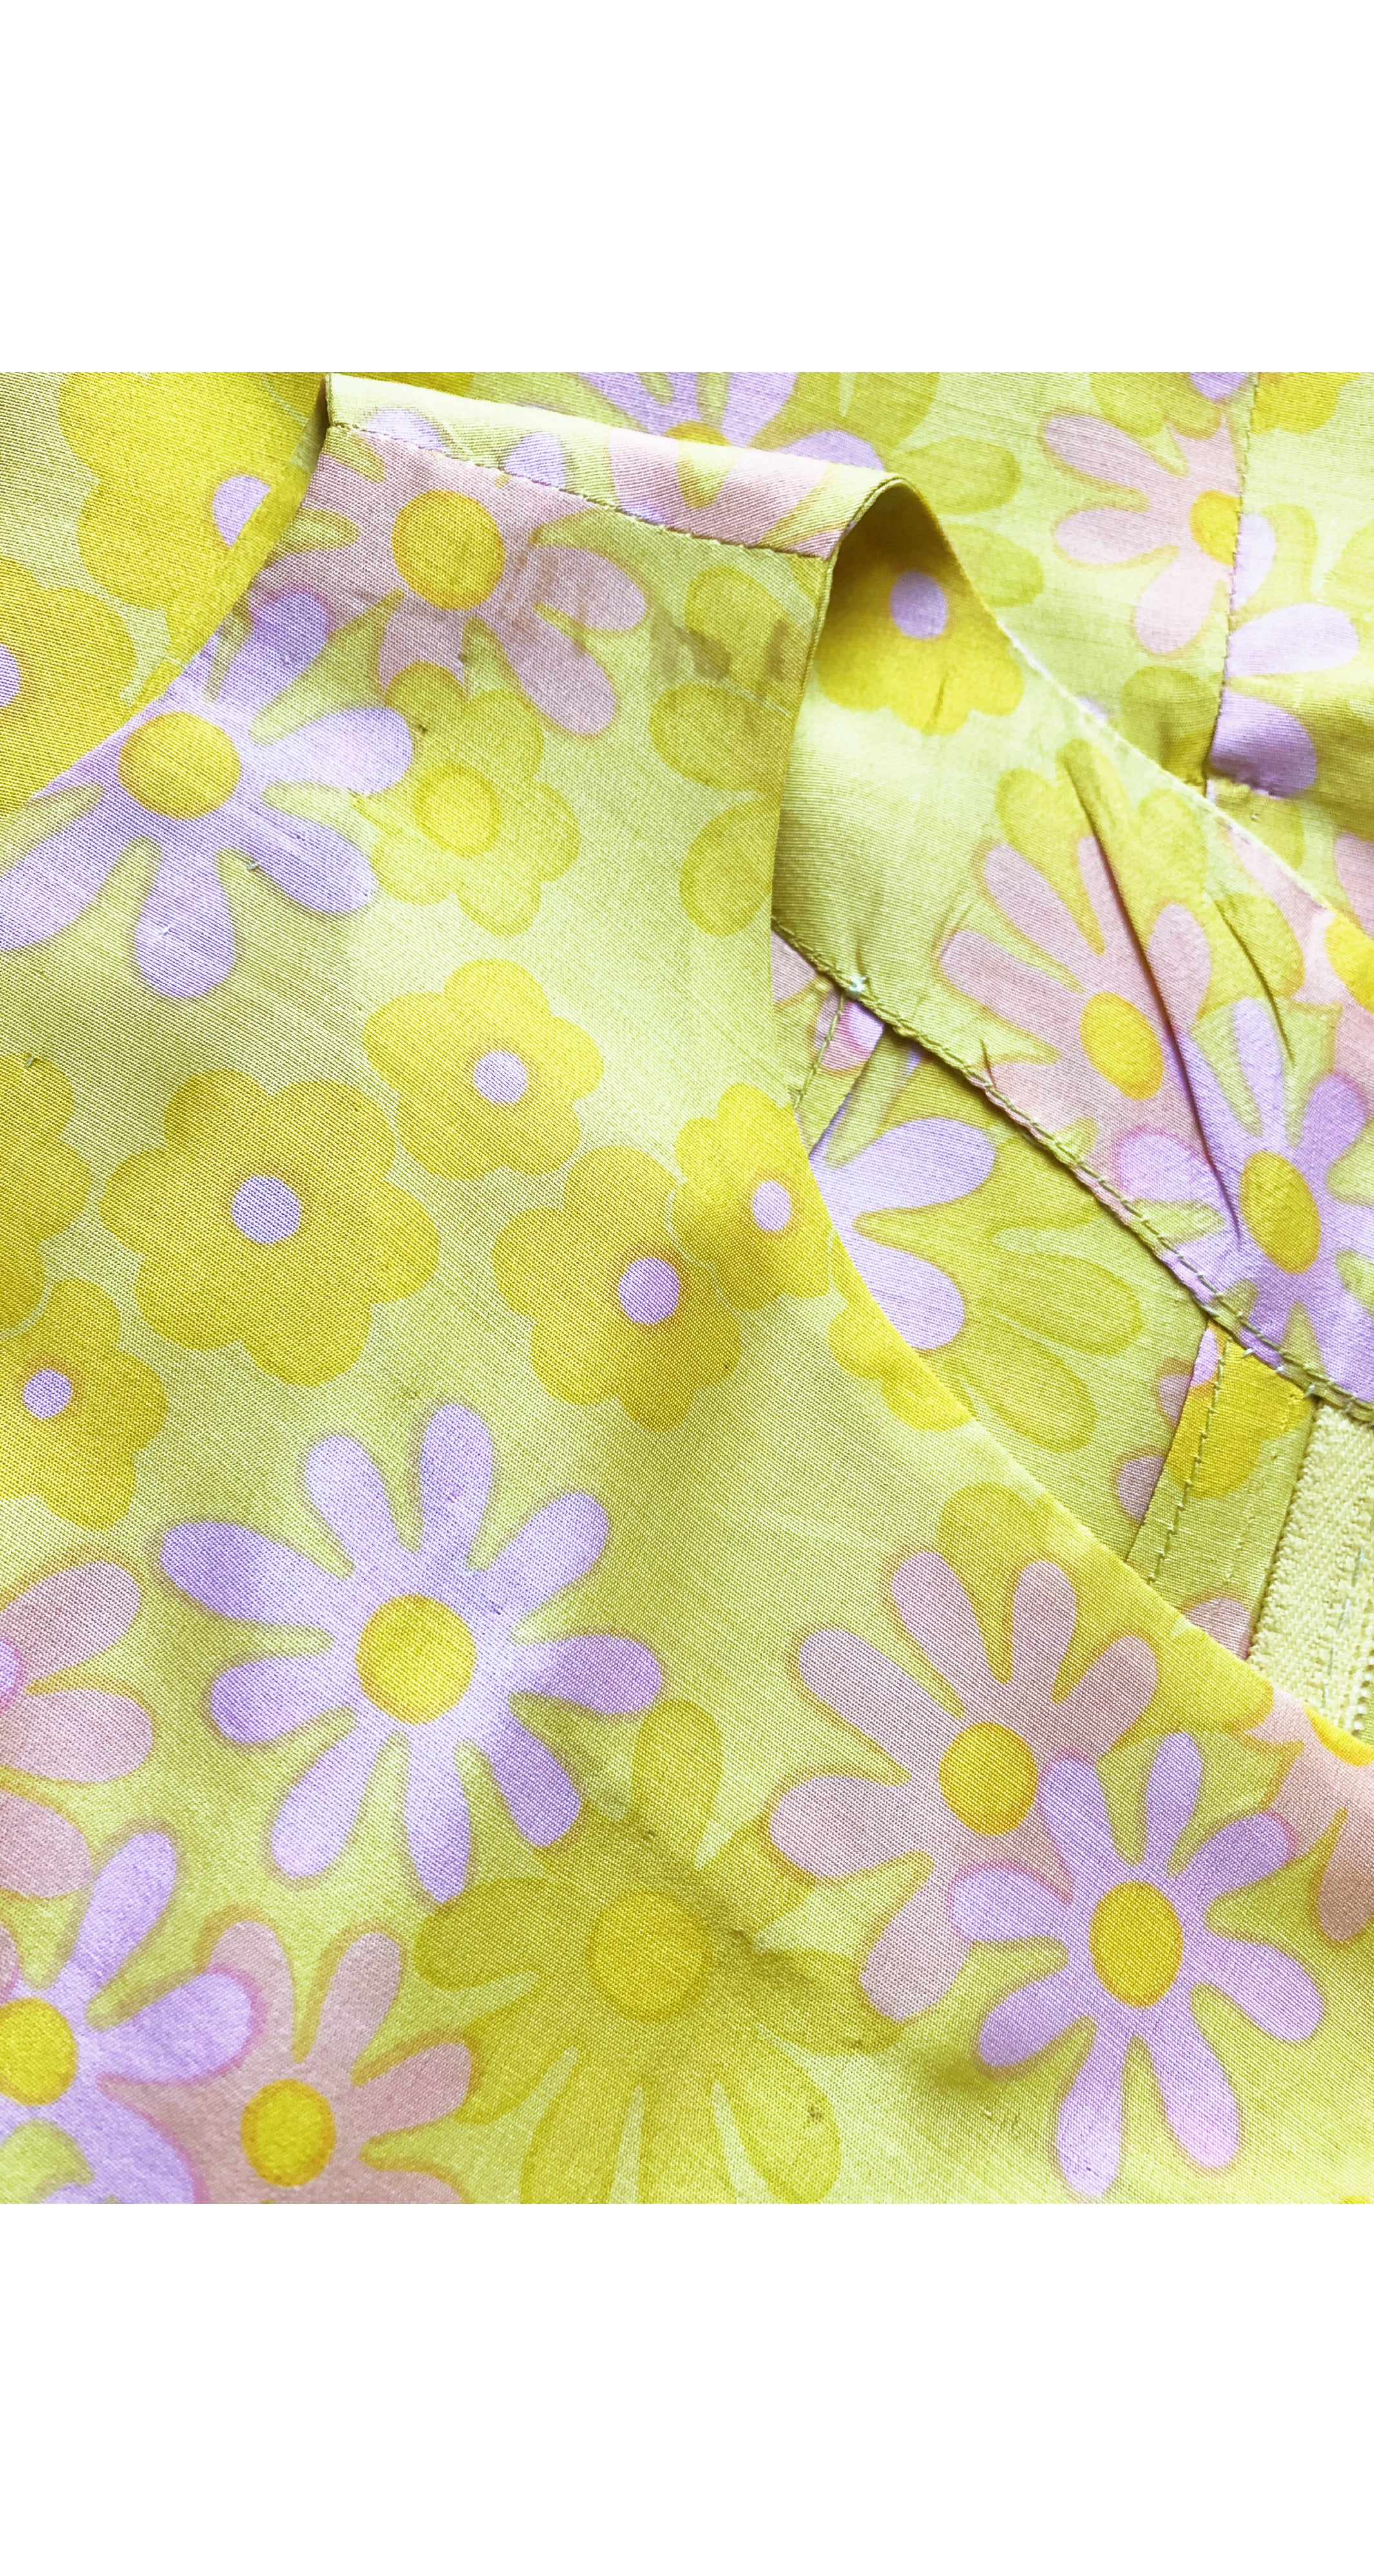 1960s Floral Silk Top & Brocade Trouser Set